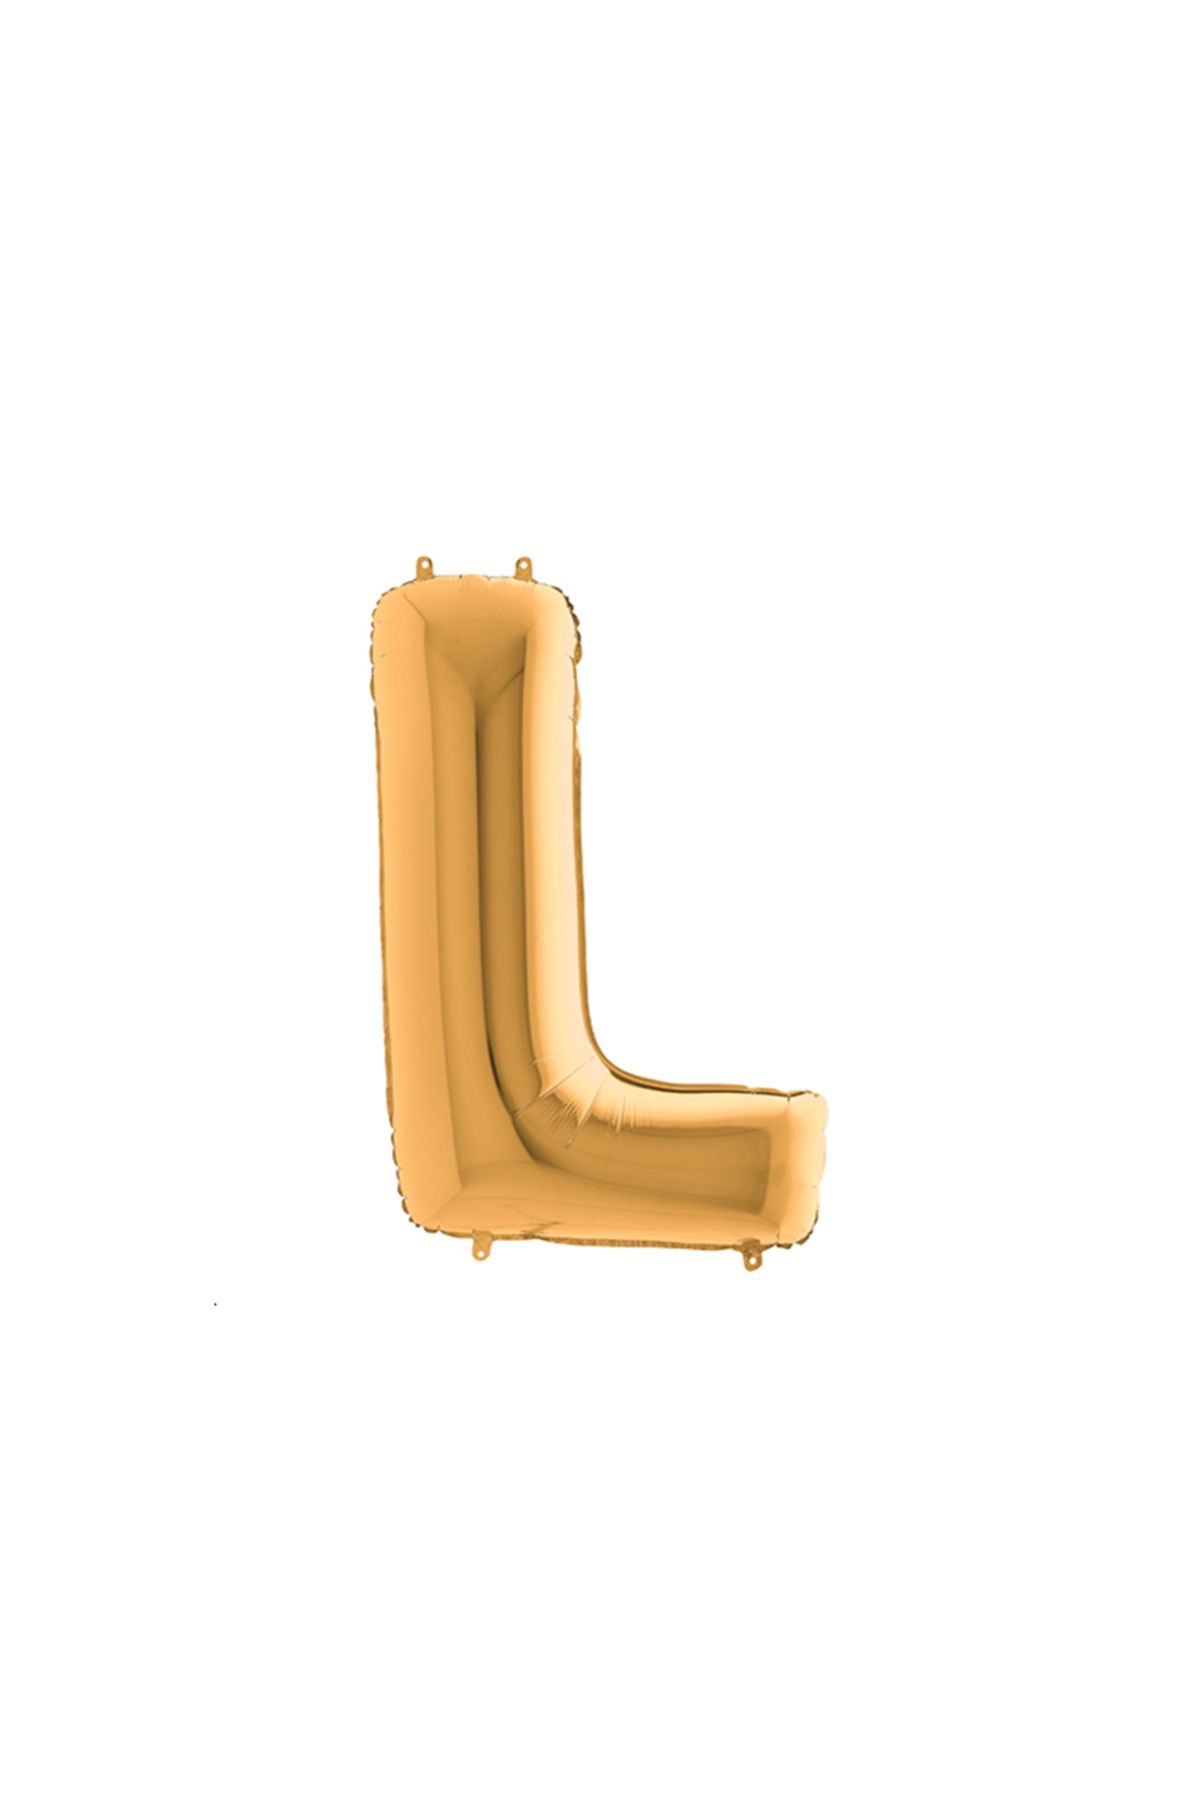 Bimotif Harfli folyo balon, altın renkli parlak, 102cm L Harfi 1 adet